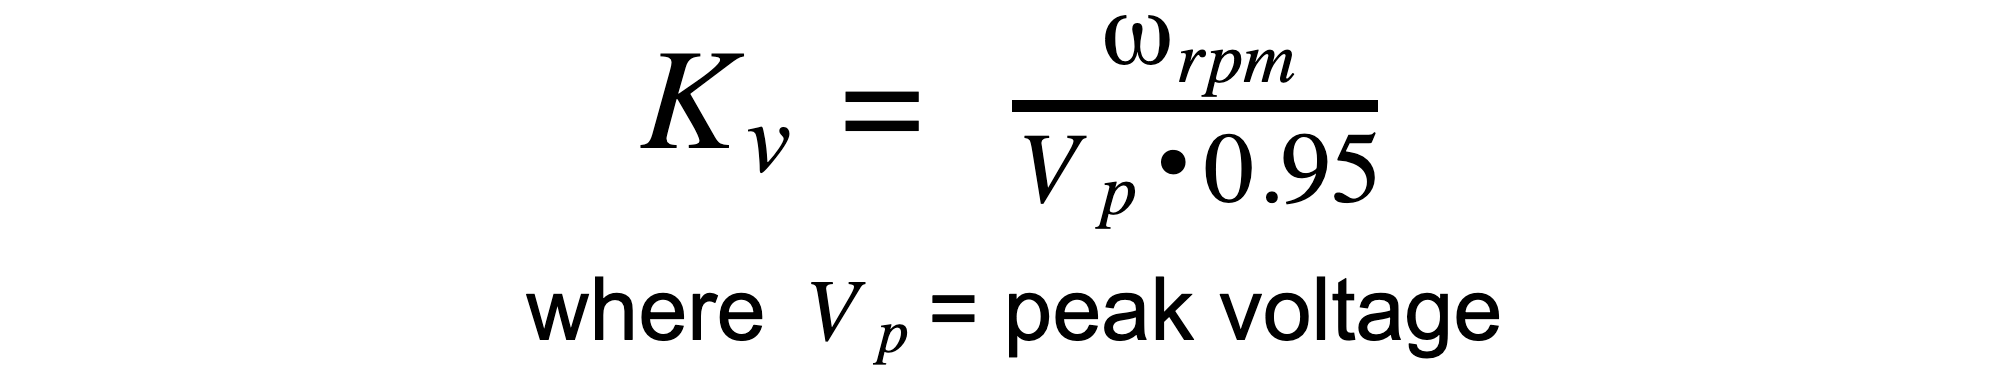 Motor Kv formula Kv=speed/peak voltage*0.95